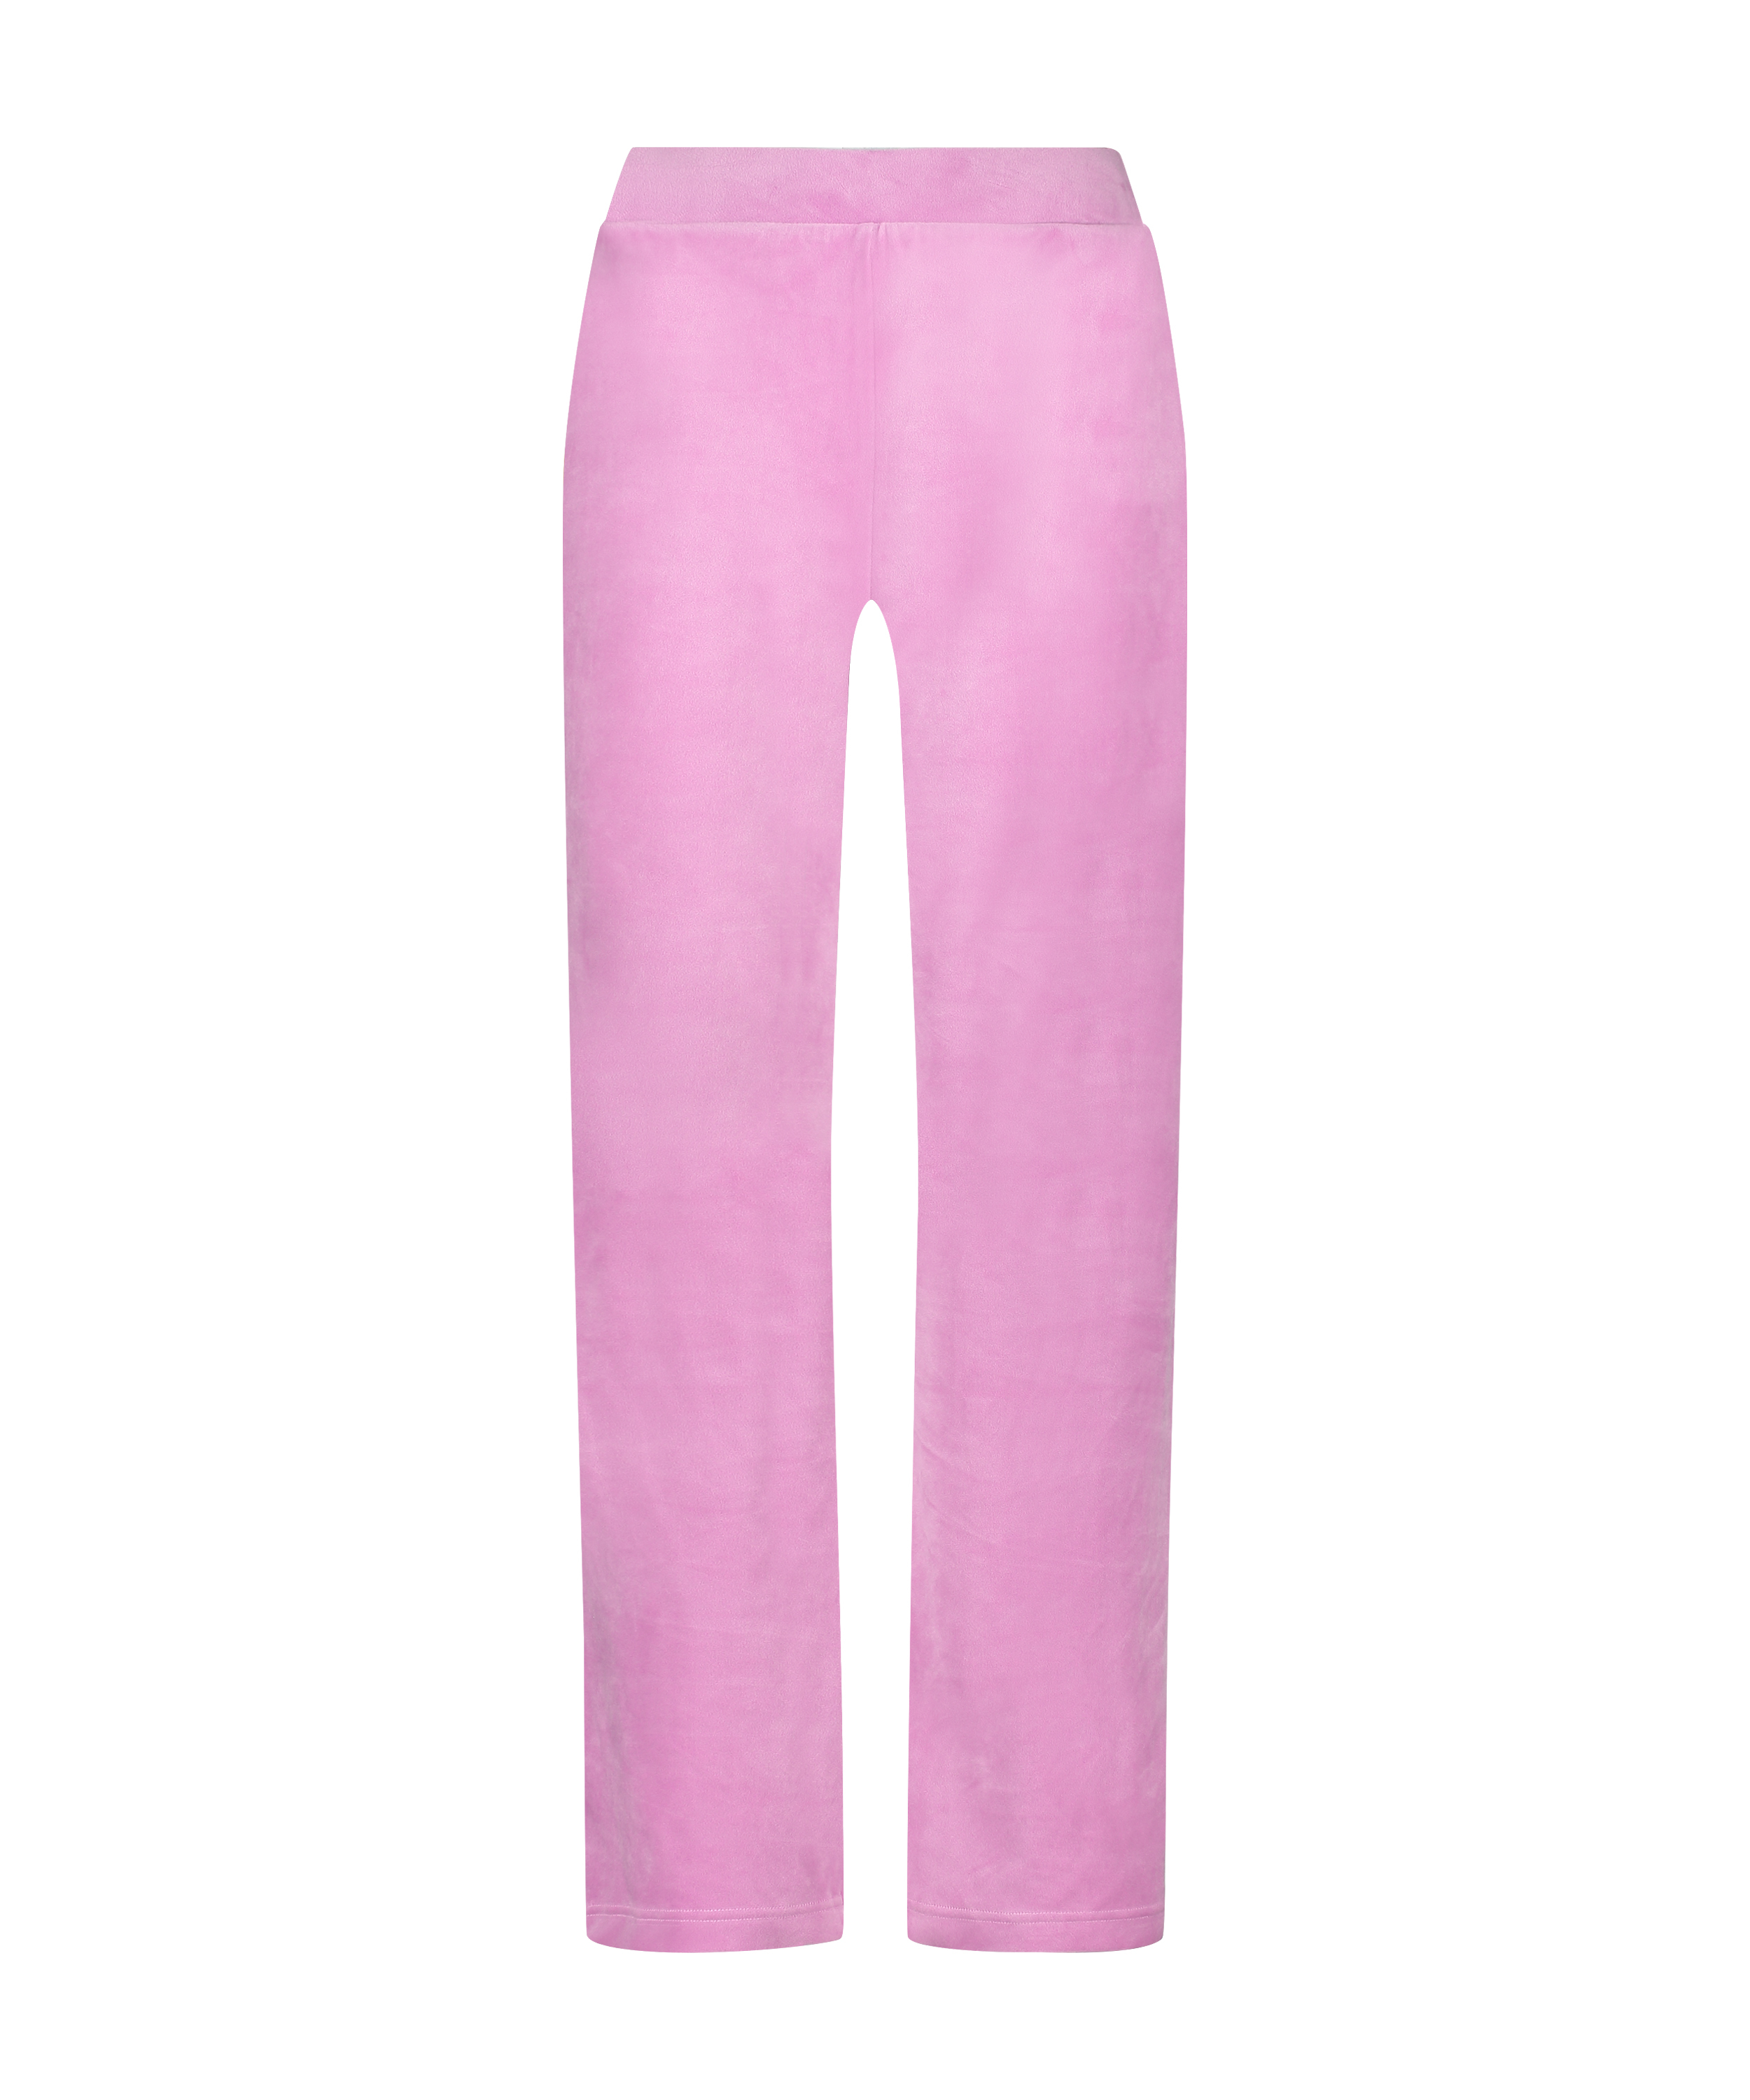 Velours Pyjama Pants, Pink, main